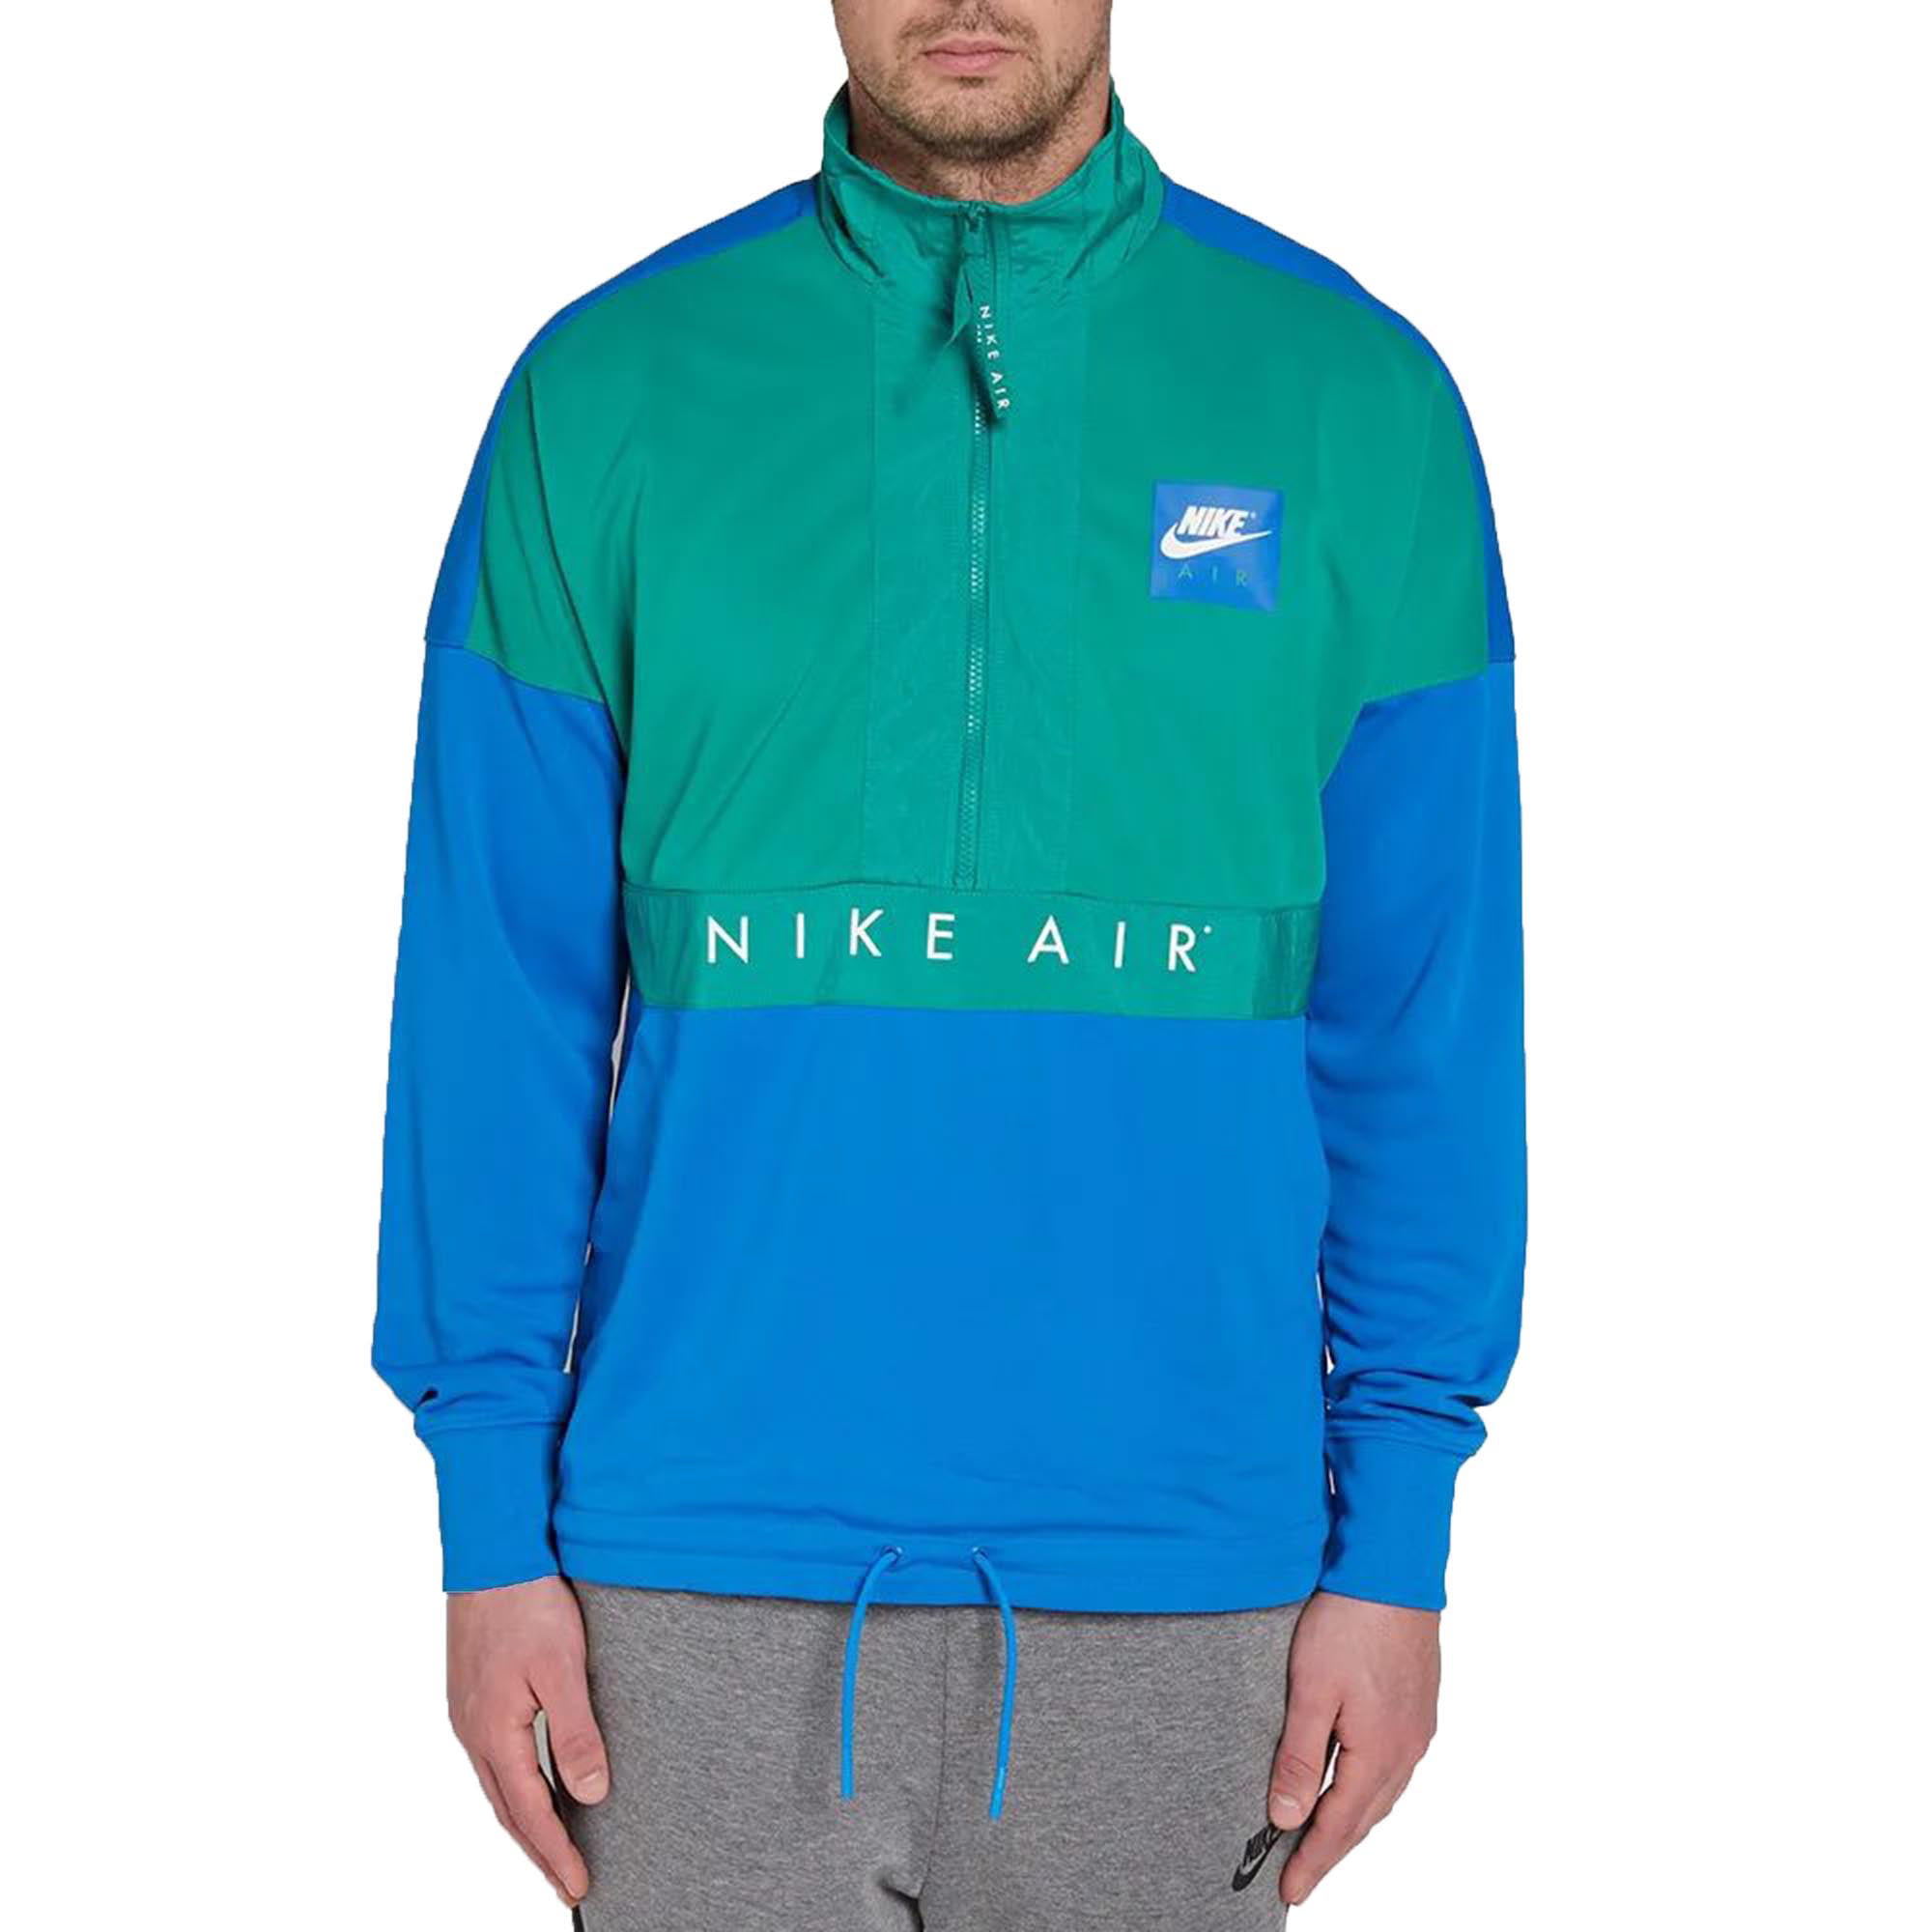 Nike Air Men's Zip Jacket 918324-368 - Walmart.com